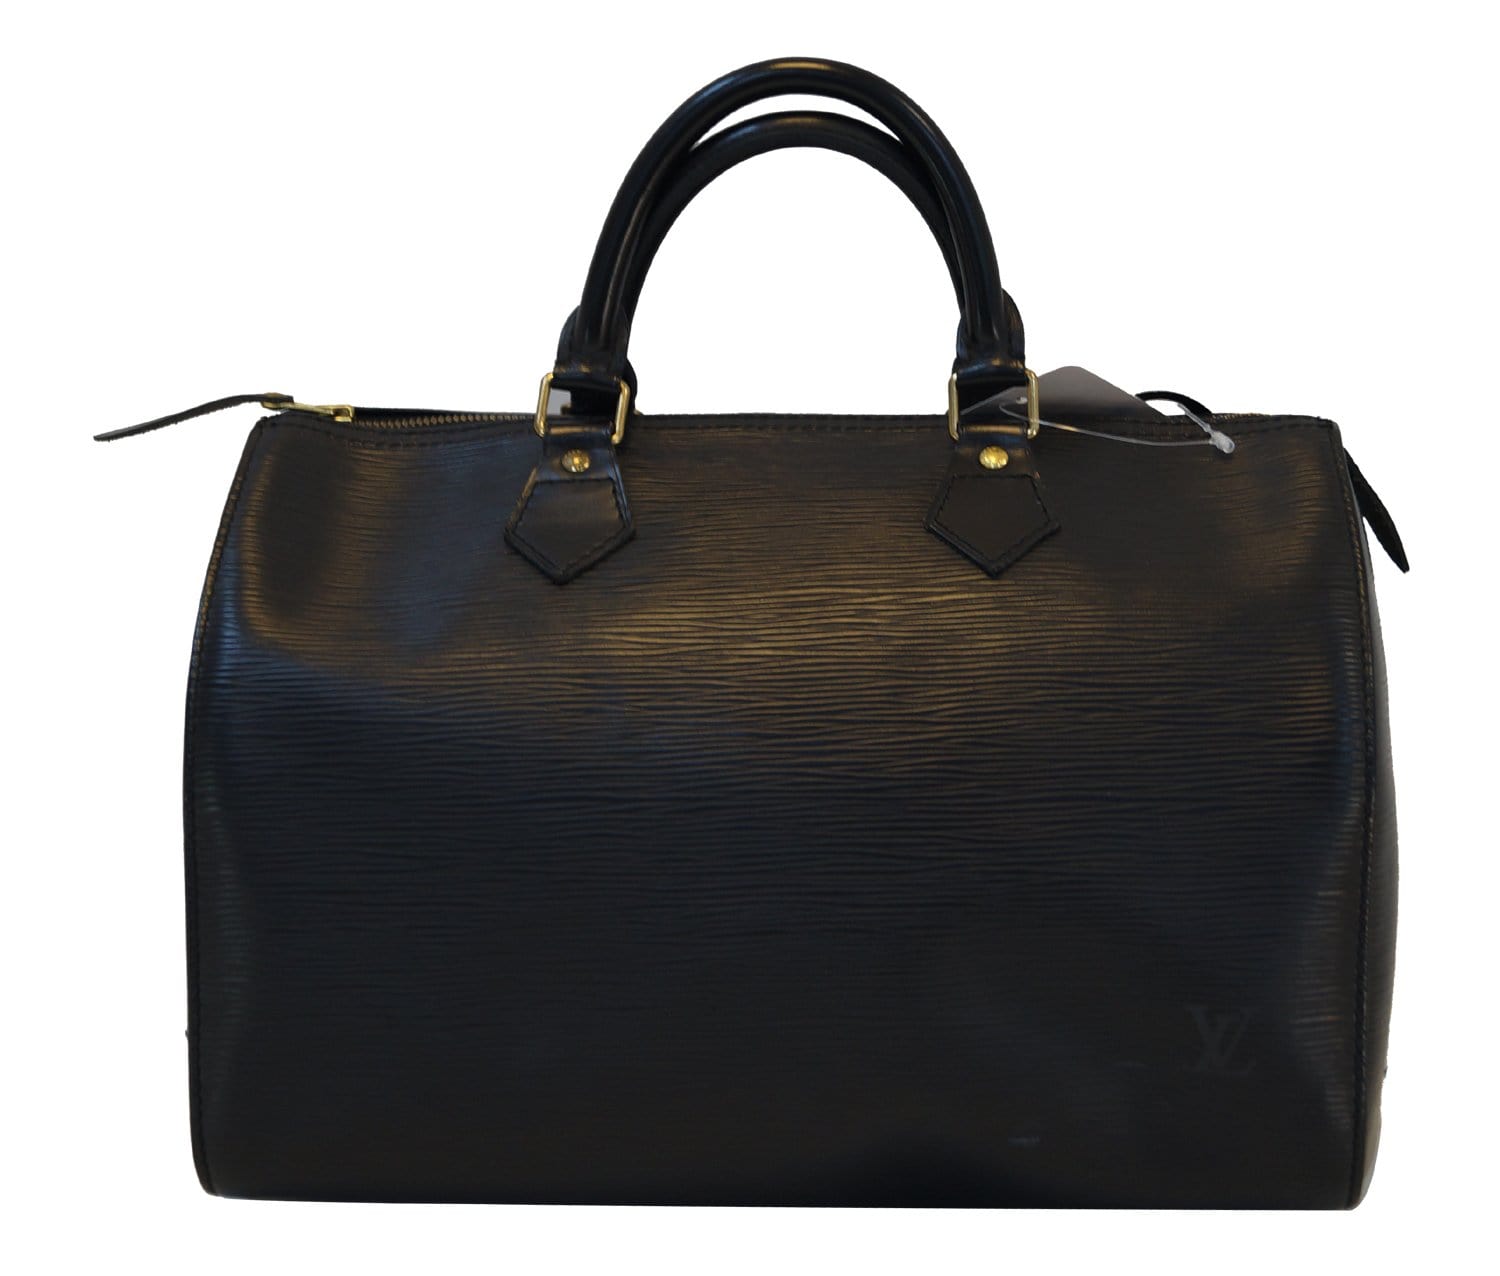 Authentic Louis Vuitton Speedy 3 Epi leather – JOY'S CLASSY COLLECTION